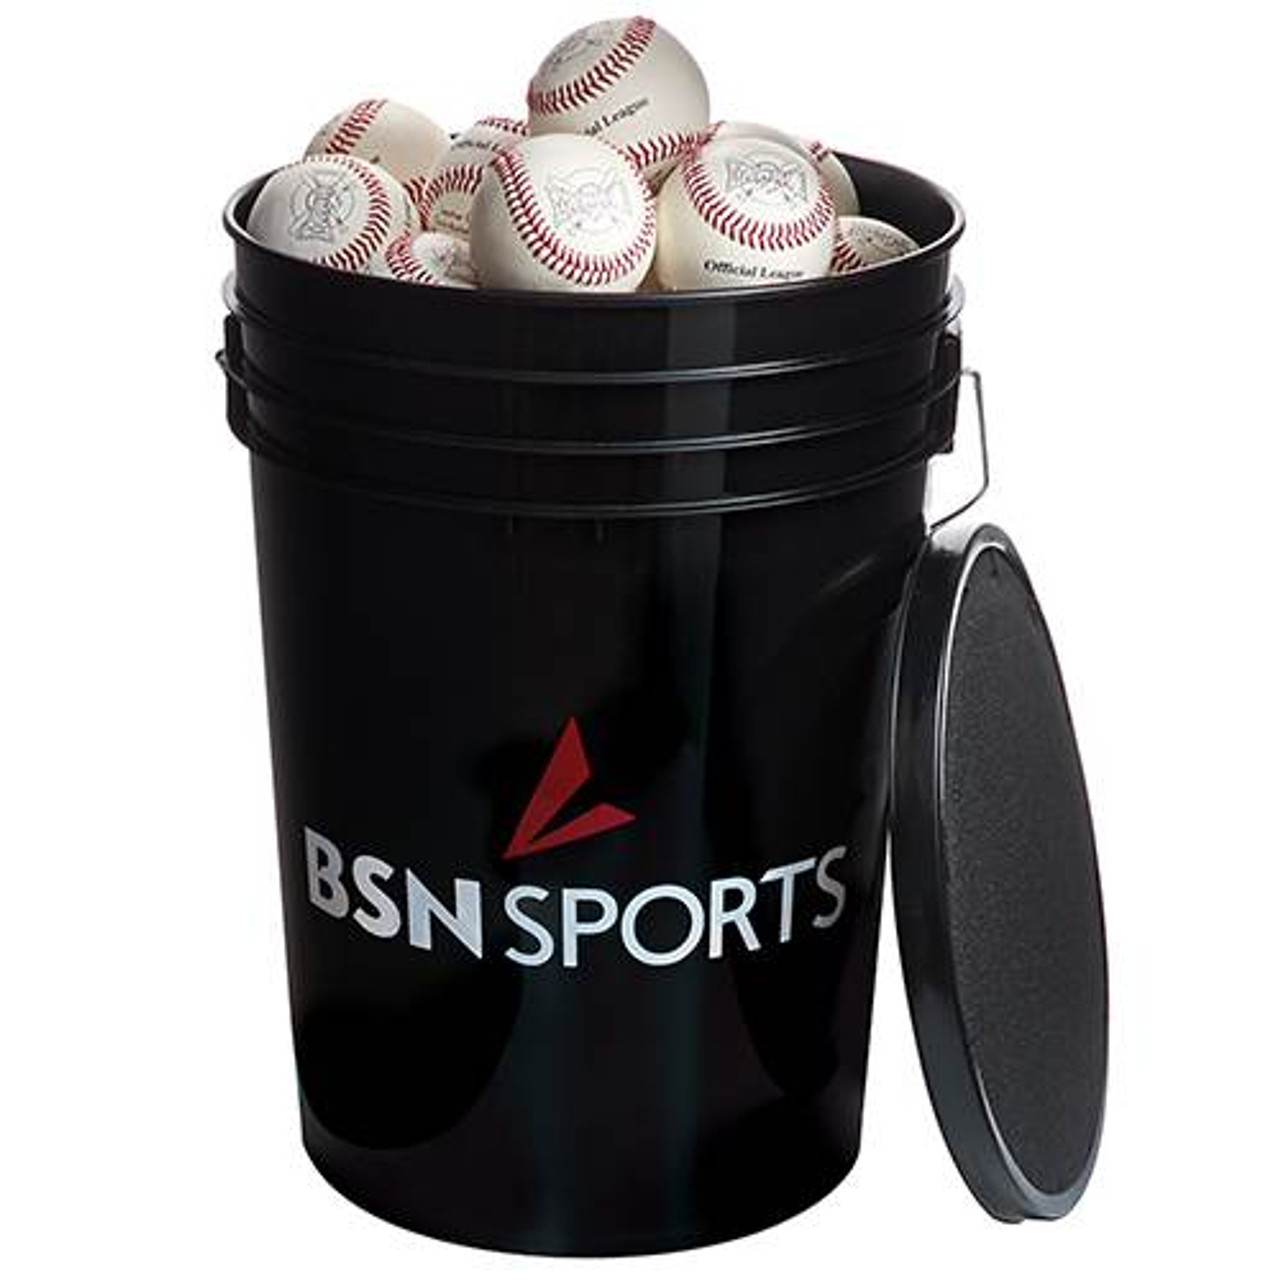 BSN SPORTS  Bucket with 36 Mark 1 Official League Baseballs